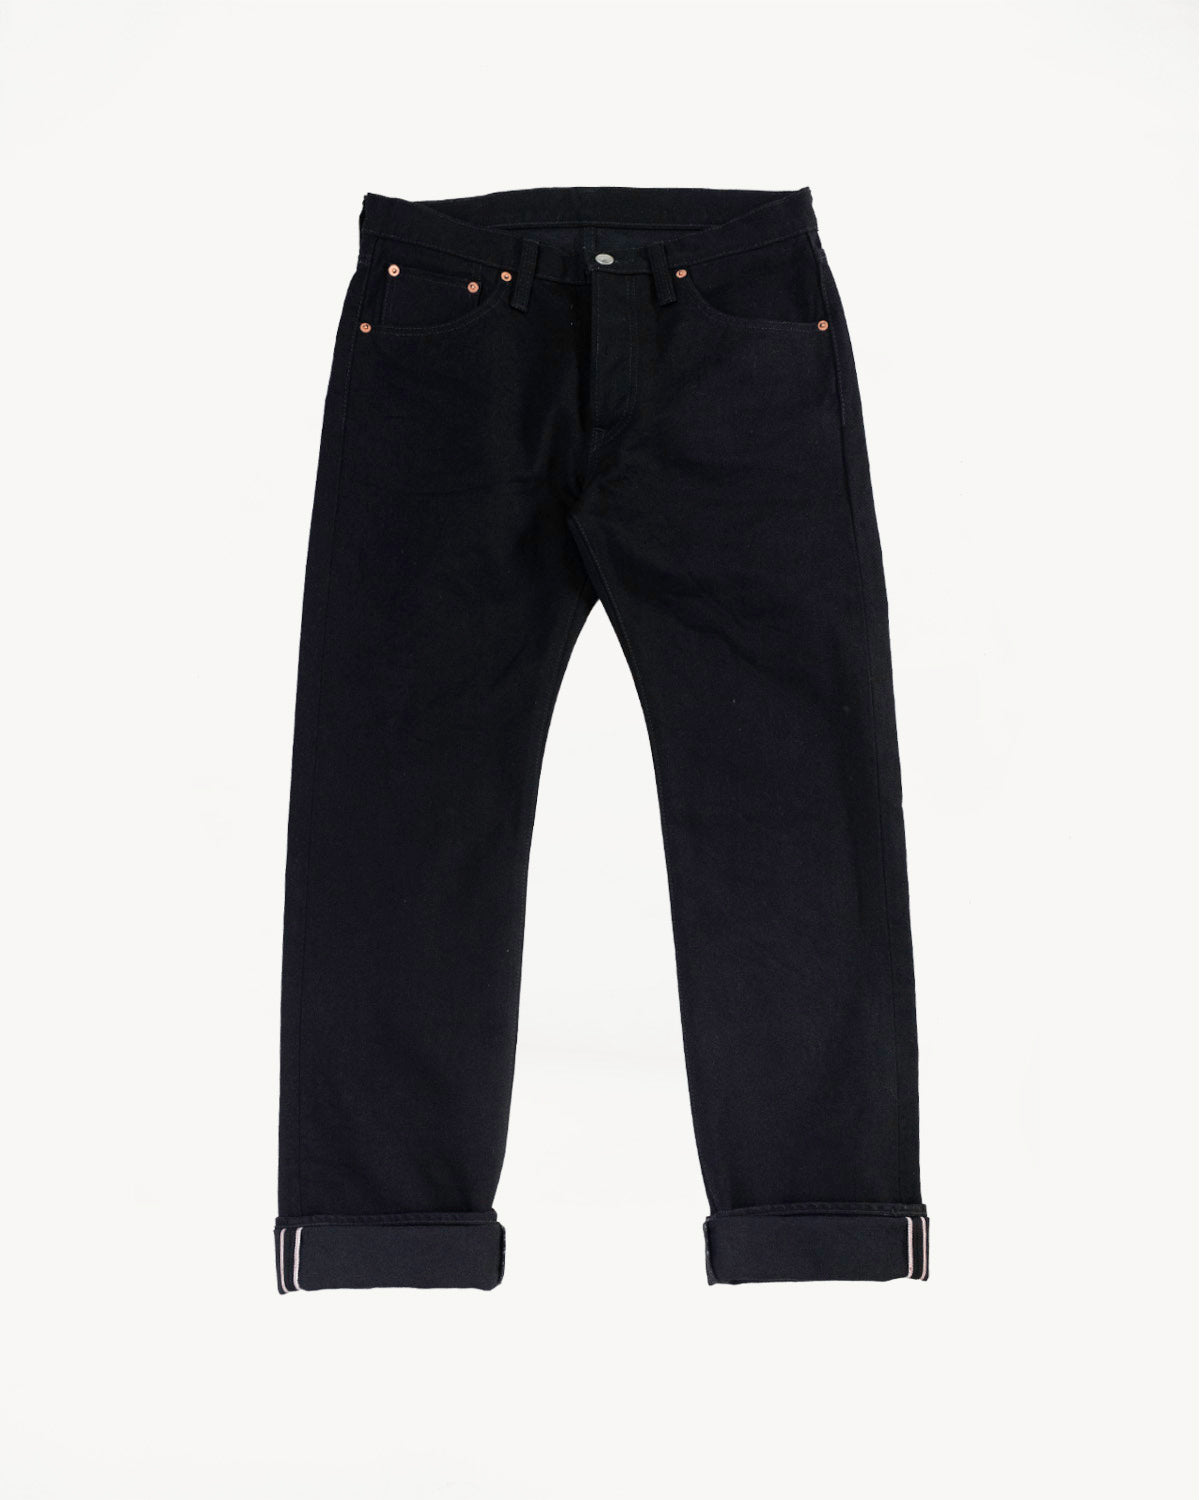 IH-666S-142bb - 14oz Selvedge Denim Slim Straight Cut Jeans - Black/Black